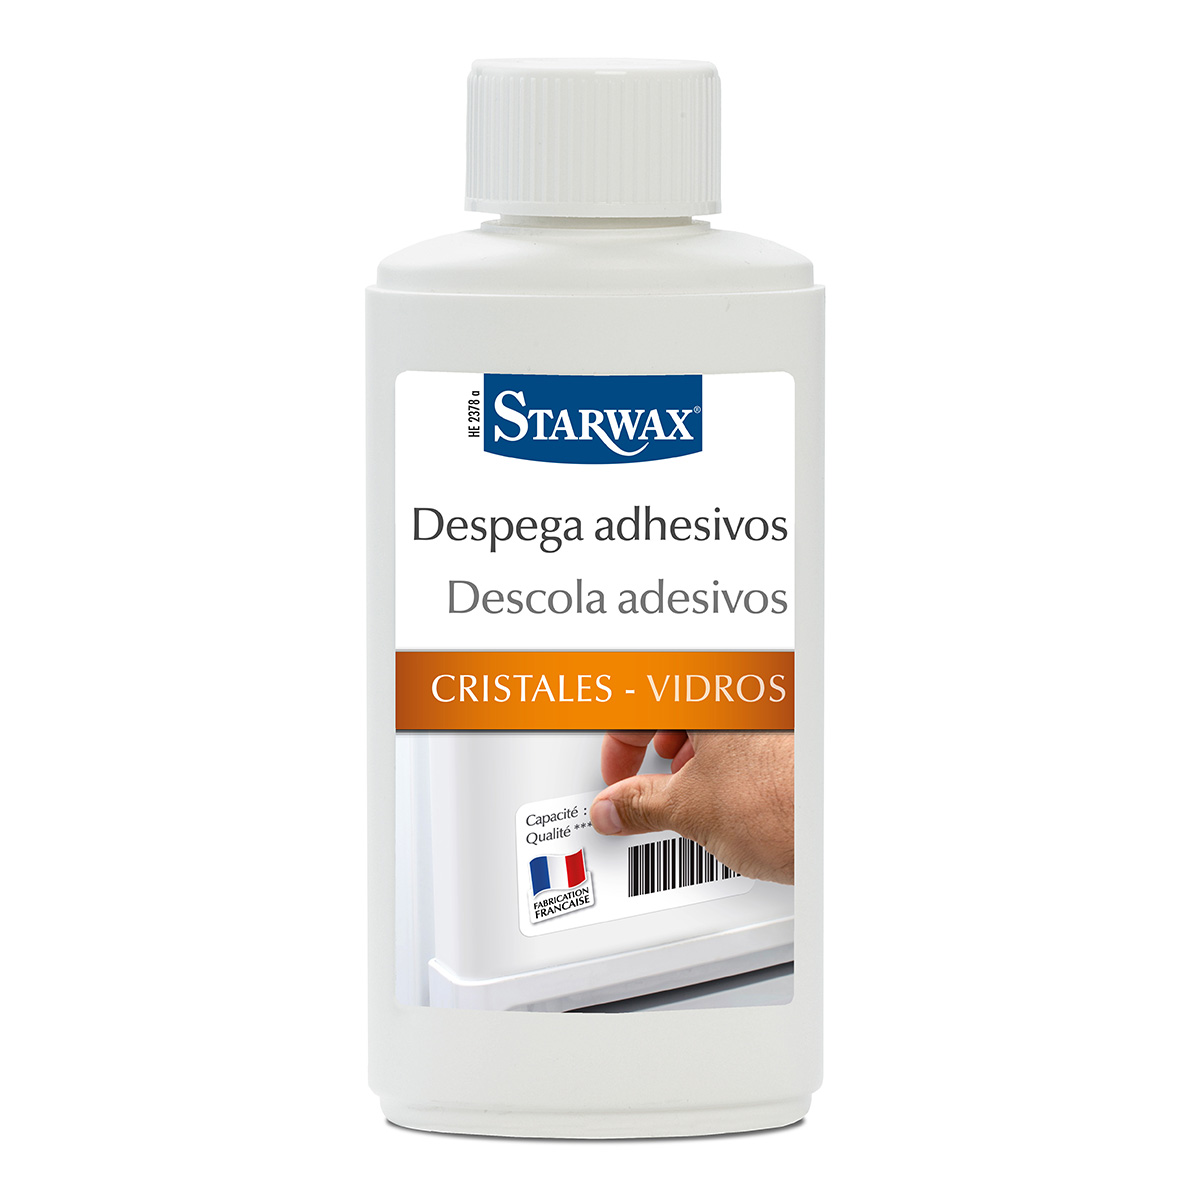 Despega adhesivos – Starwax